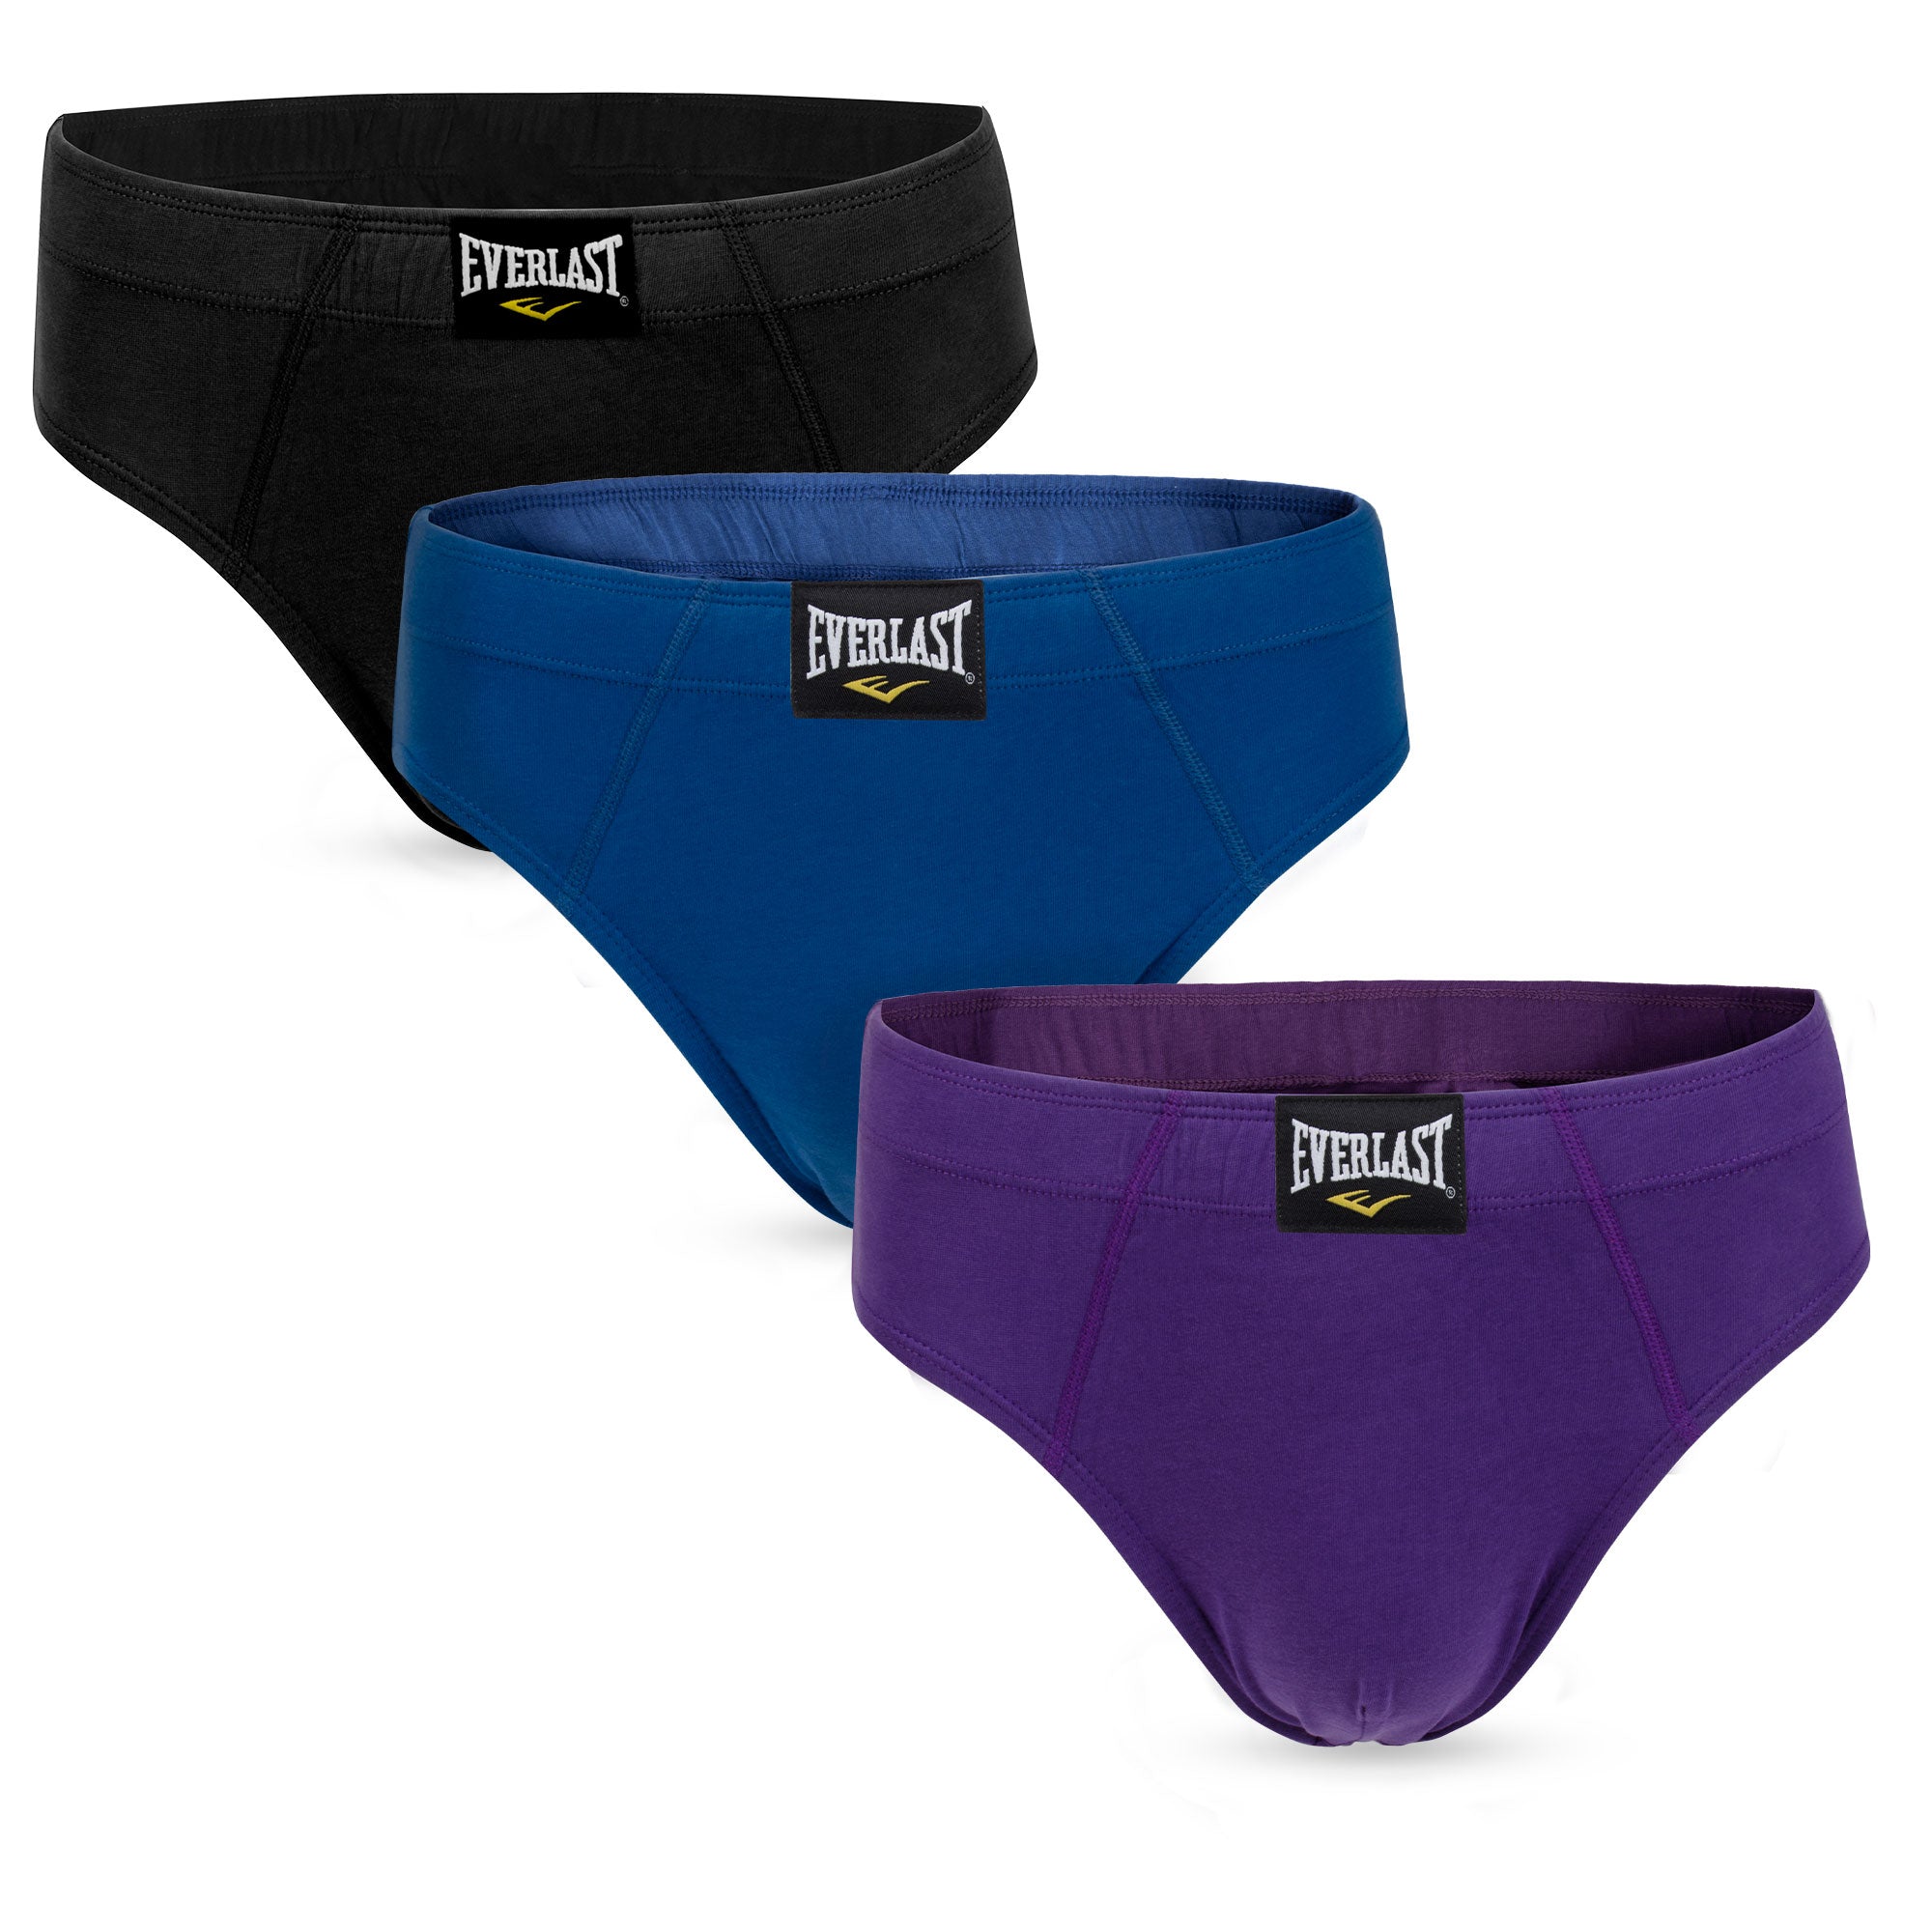 Everlast Mens Boxer Briefs Active Performance Breathable Underwear for Men,  Black/Blue Large 6-Pack 